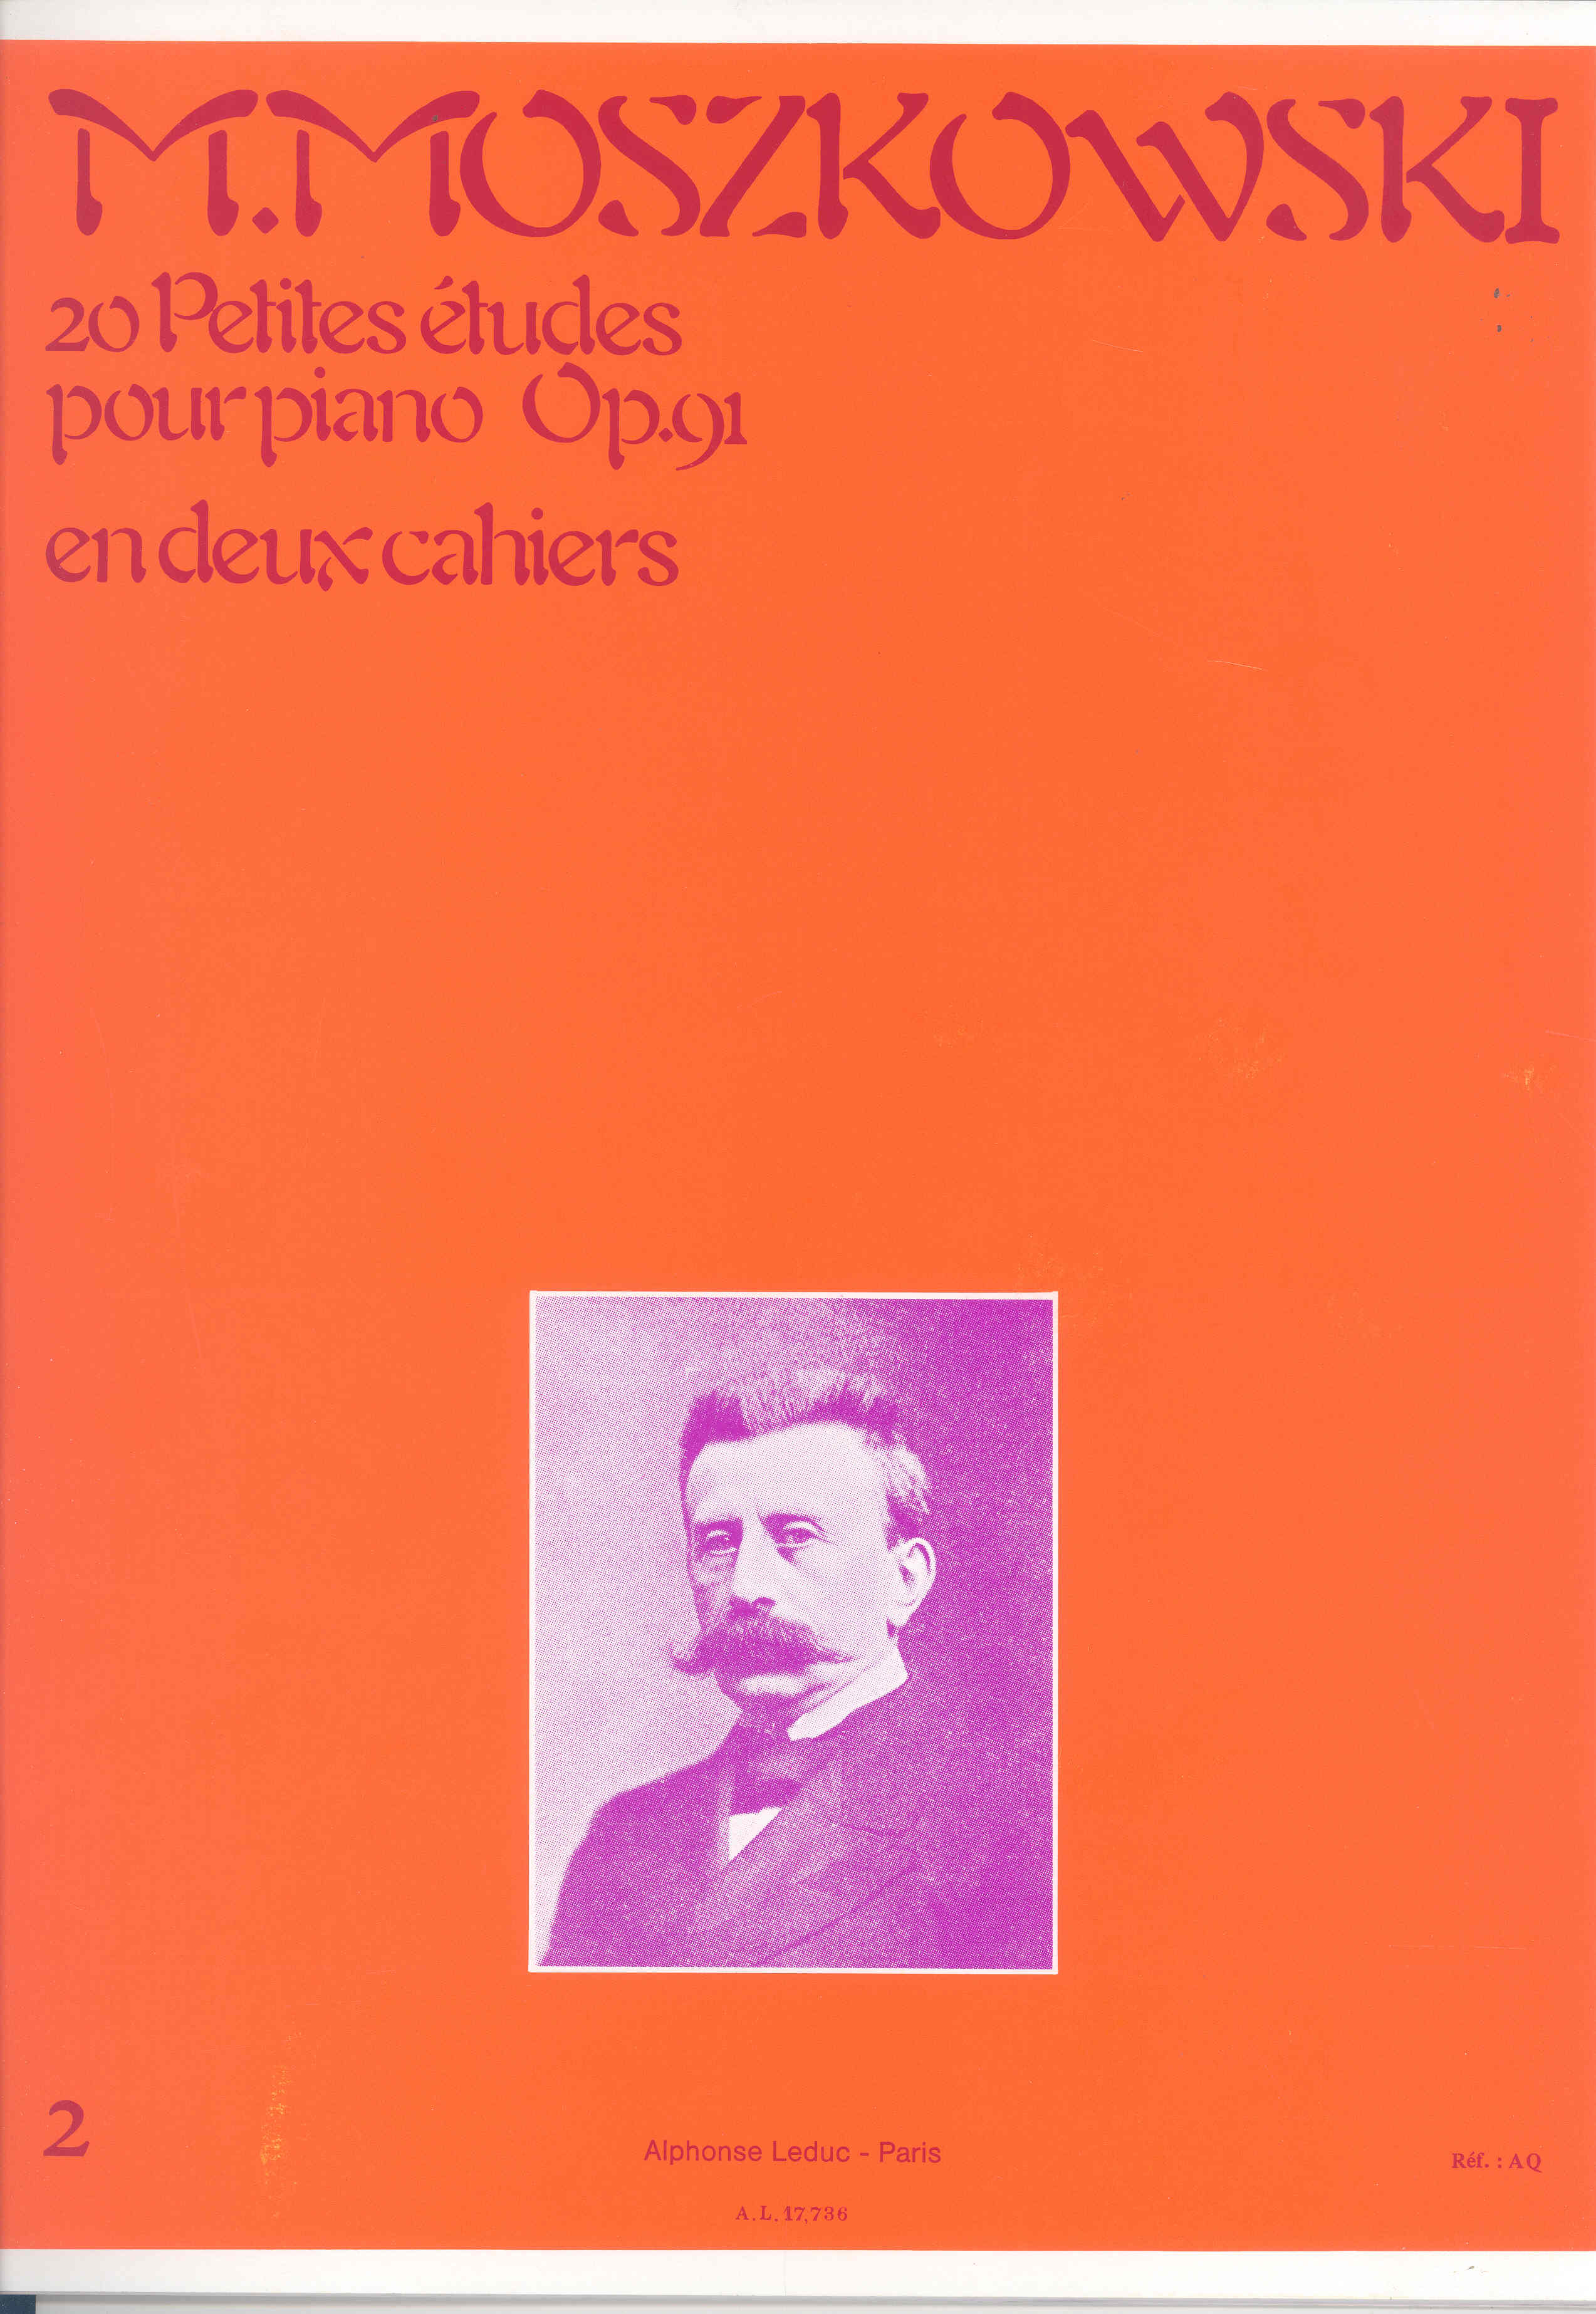 Moszkowski Petite Etudes (20) Op91 Book 2 Piano Sheet Music Songbook